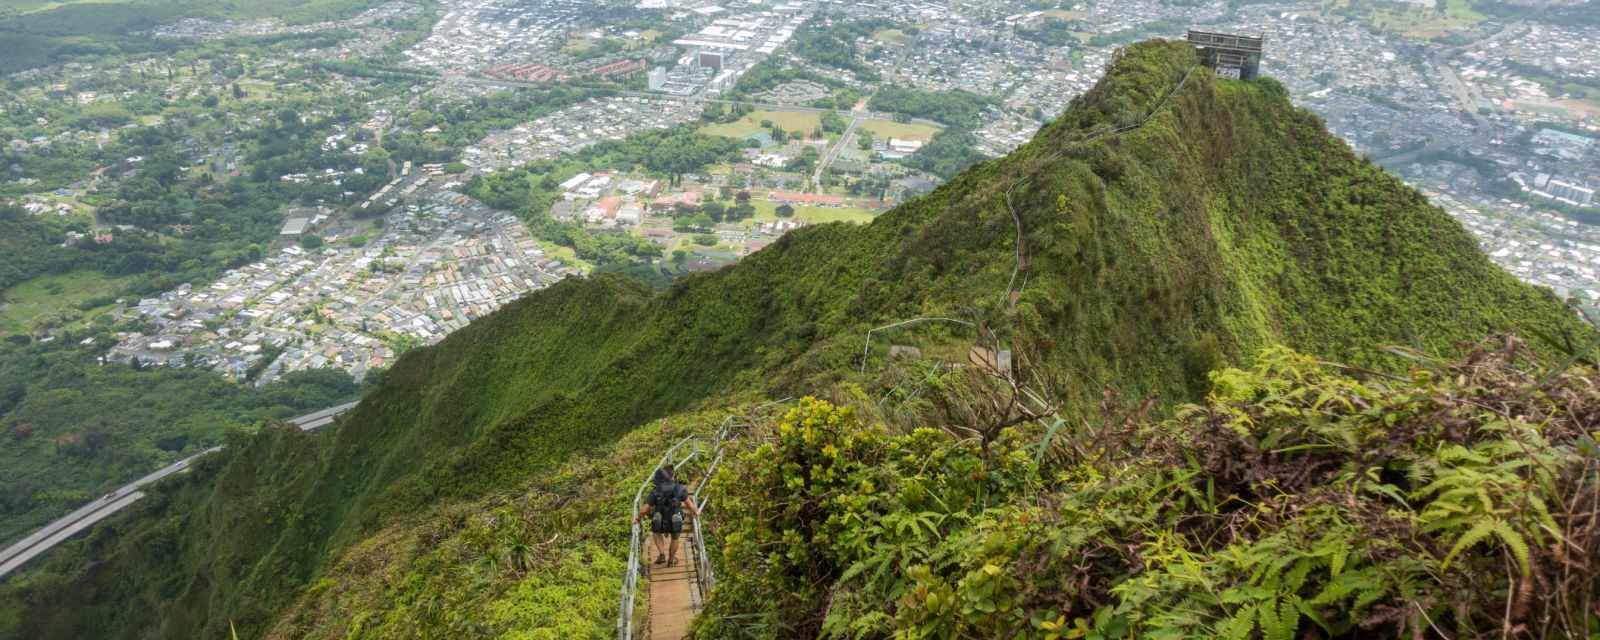 Haiku Stairs on Oahu, Hawaii - The Legal Way